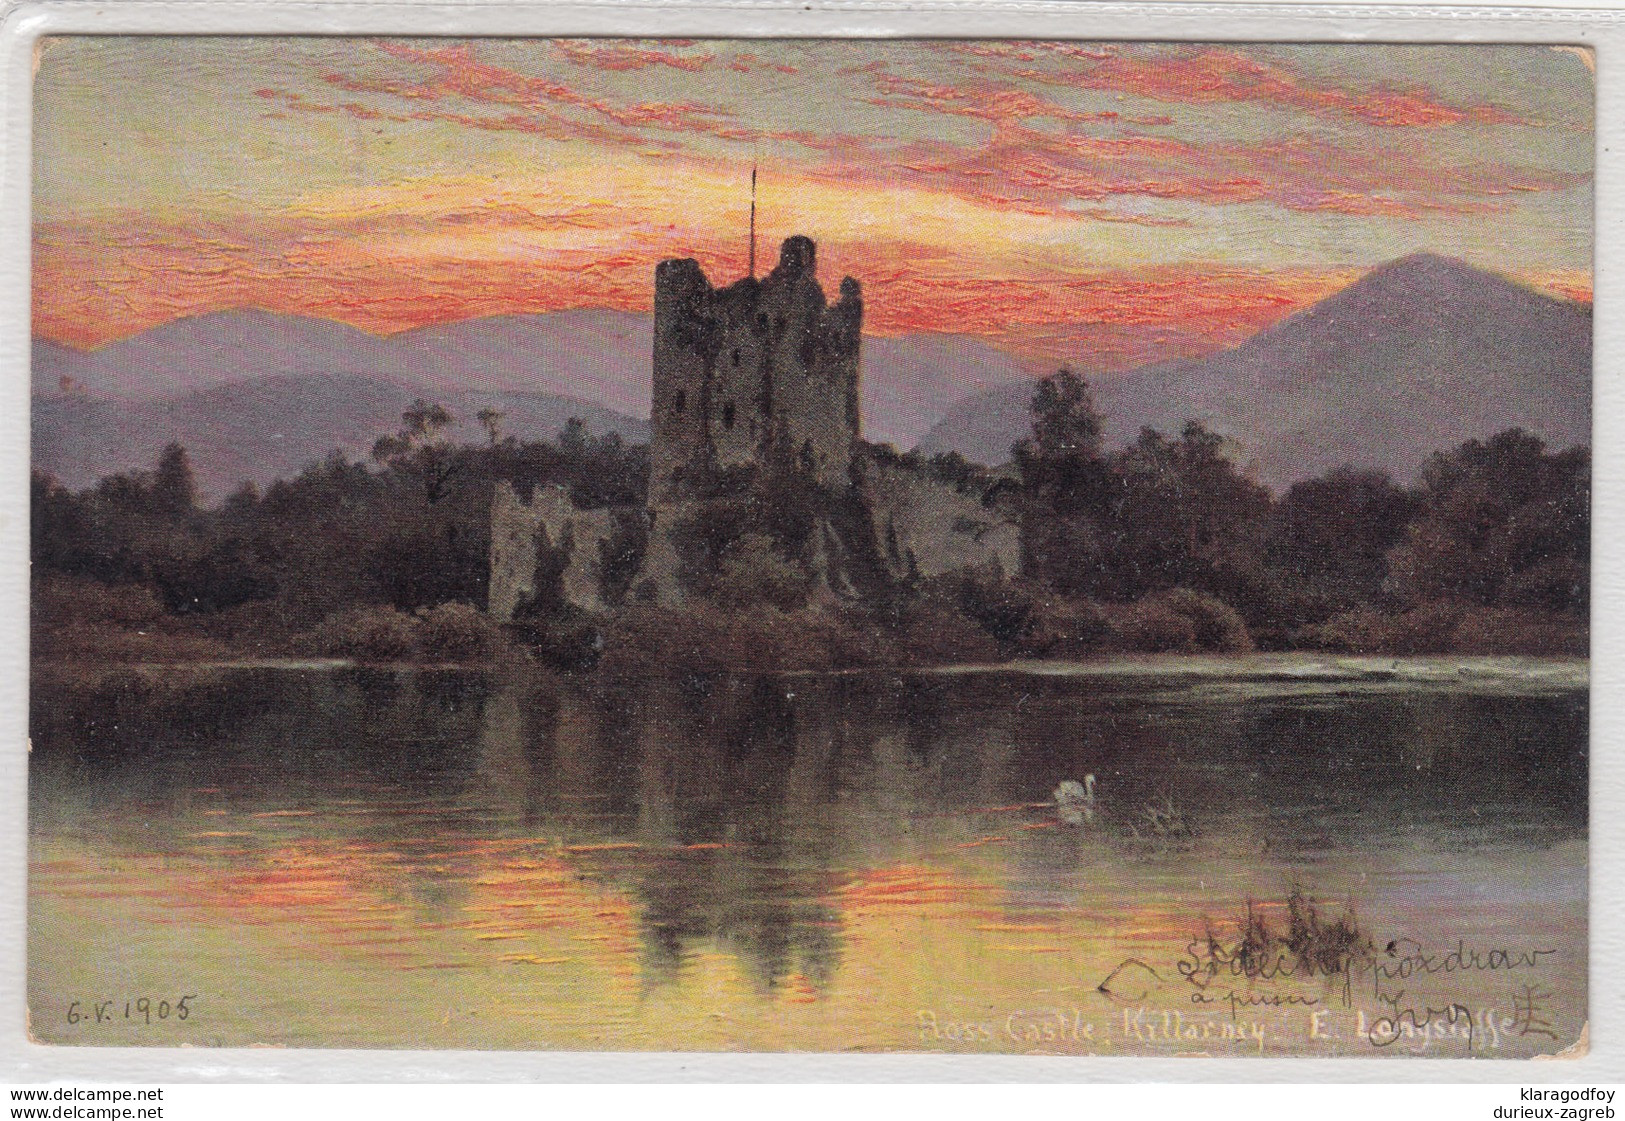 Ross Castle, Killarney Painting By Edgar Longstaffe Vintage Postcard Travelled 1905 Plzen Pmk B170301 - Kerry